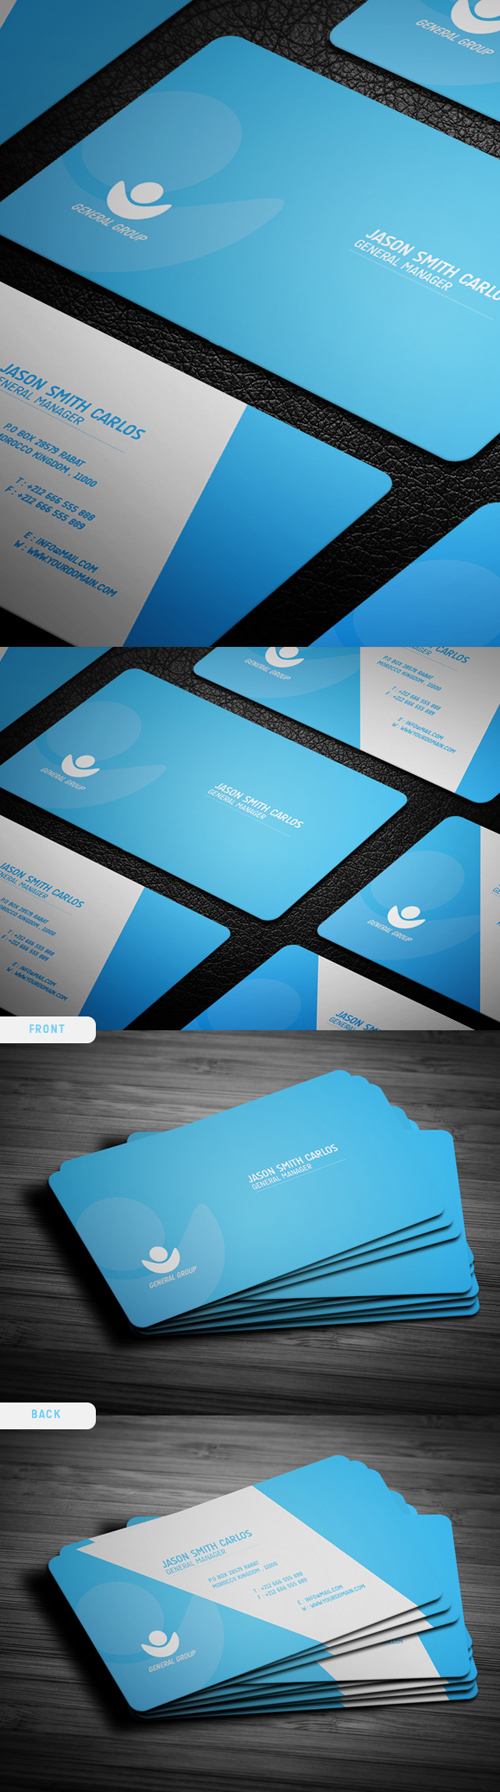 business cards template design - 12